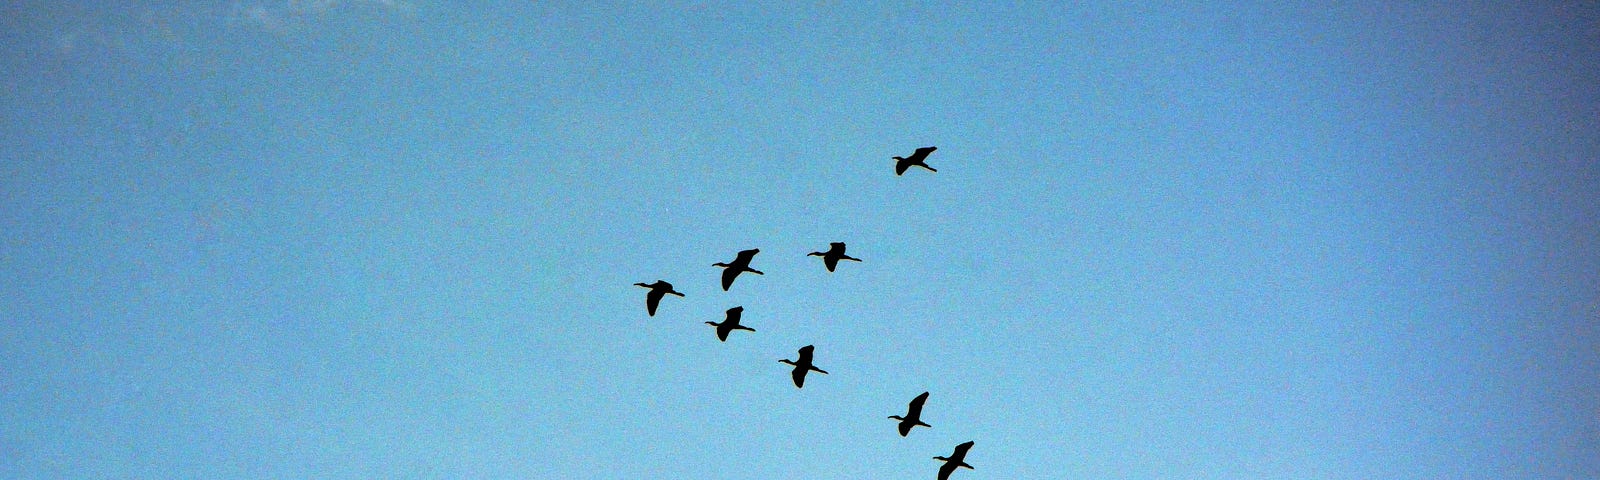 Birds flying high in the blue sky